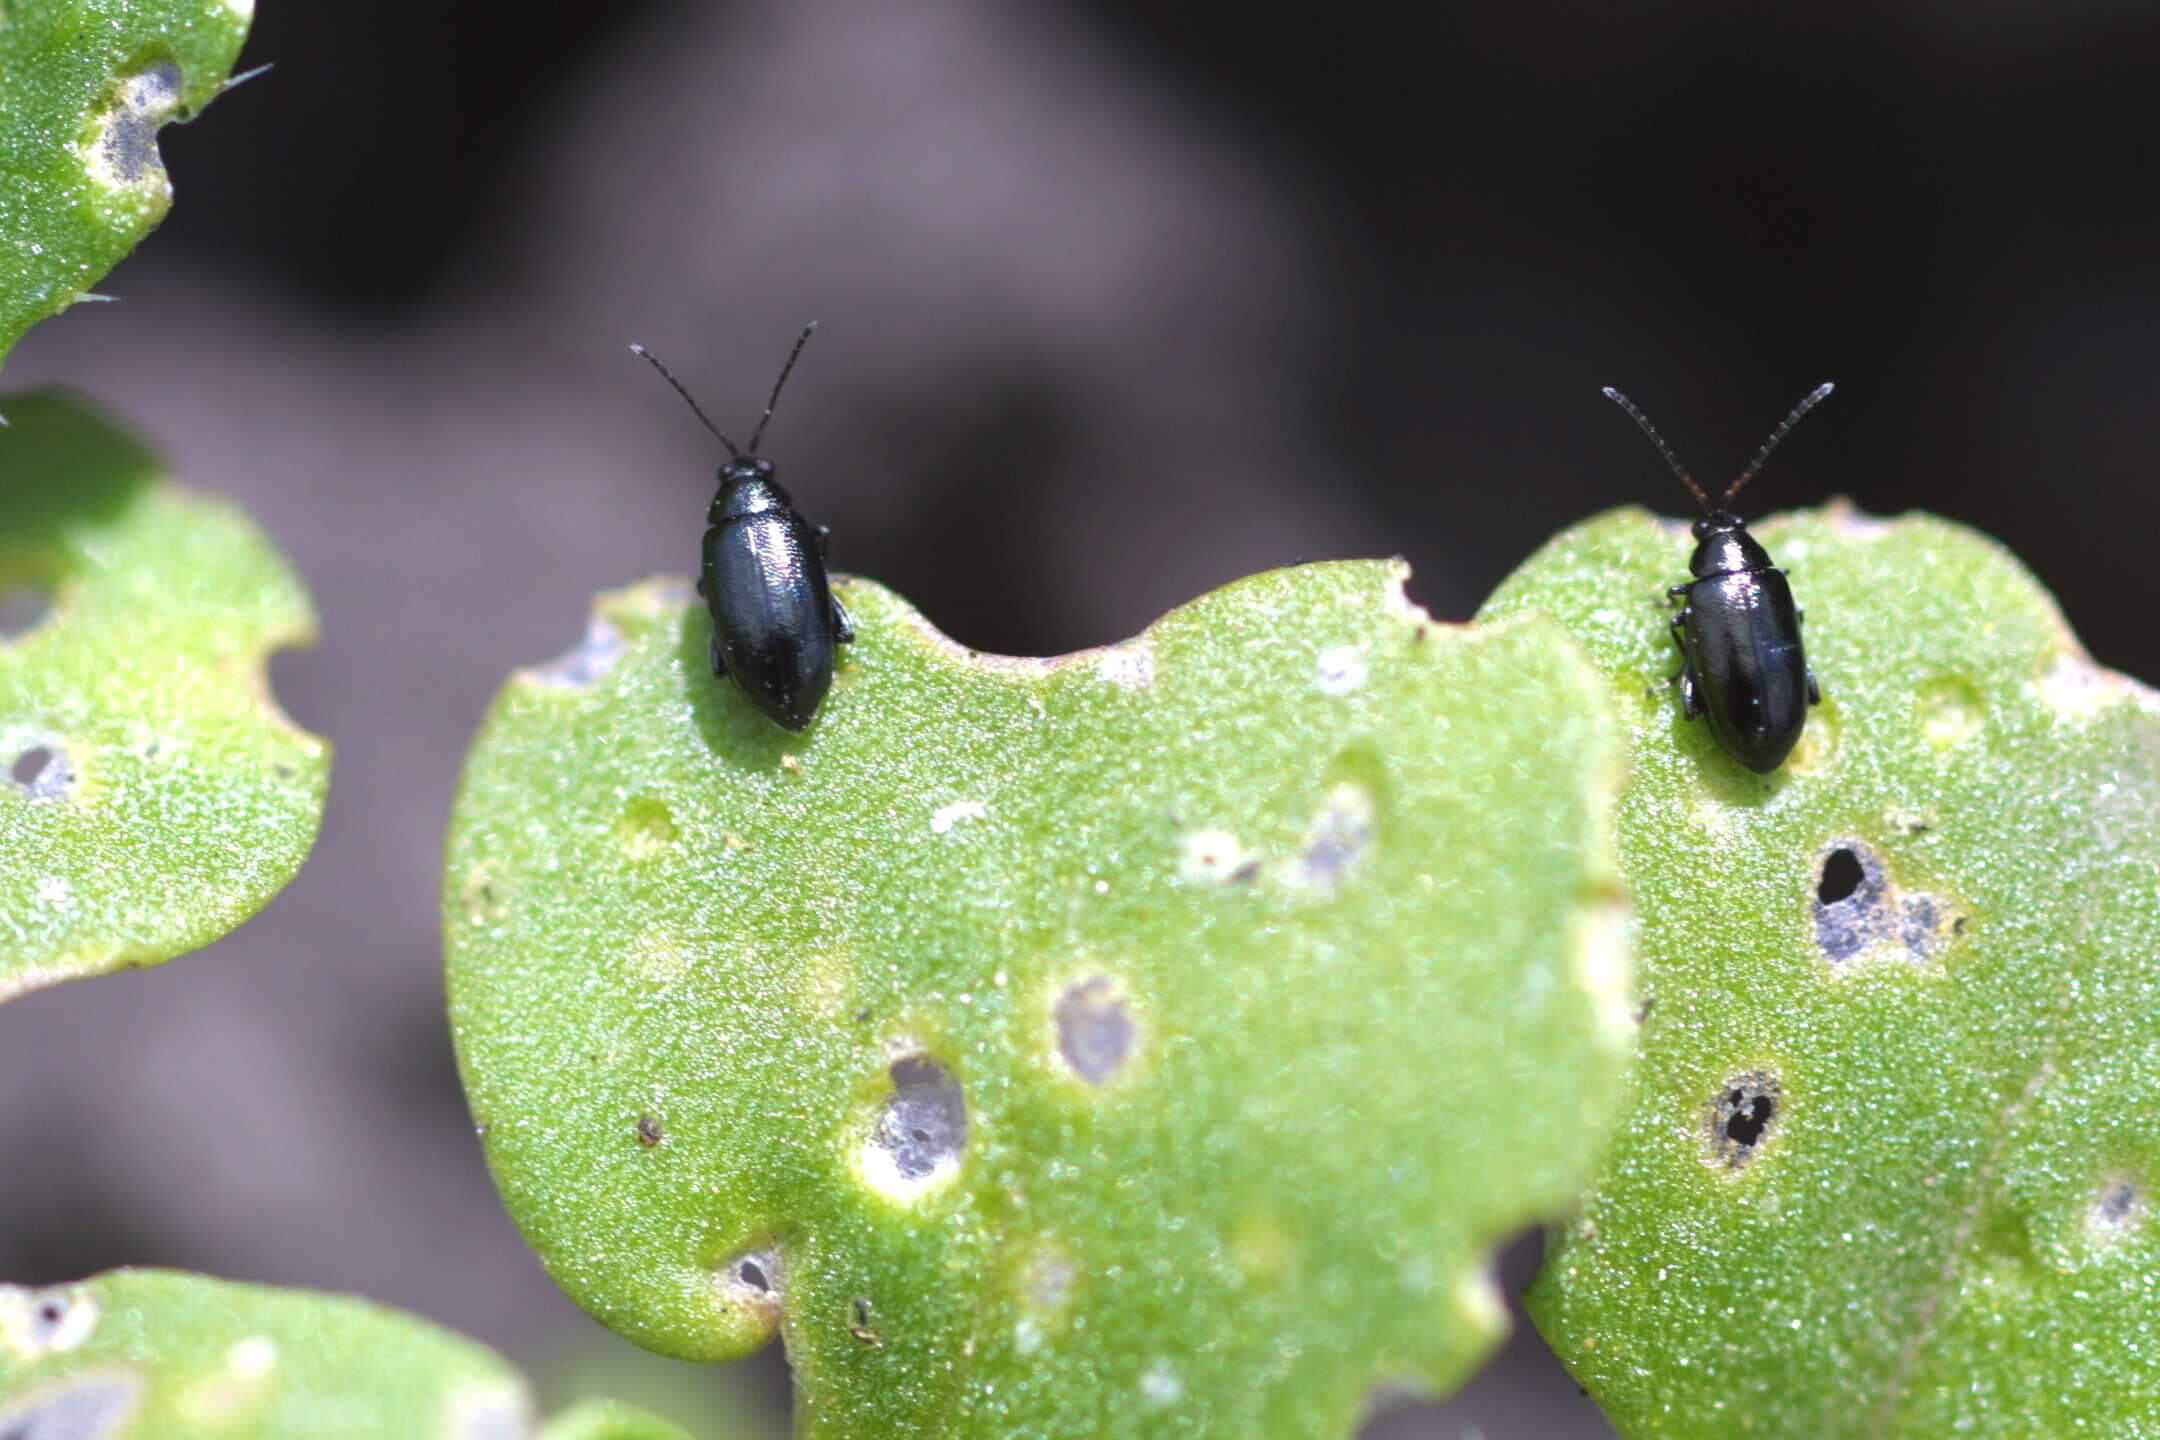 Flea beetle adults